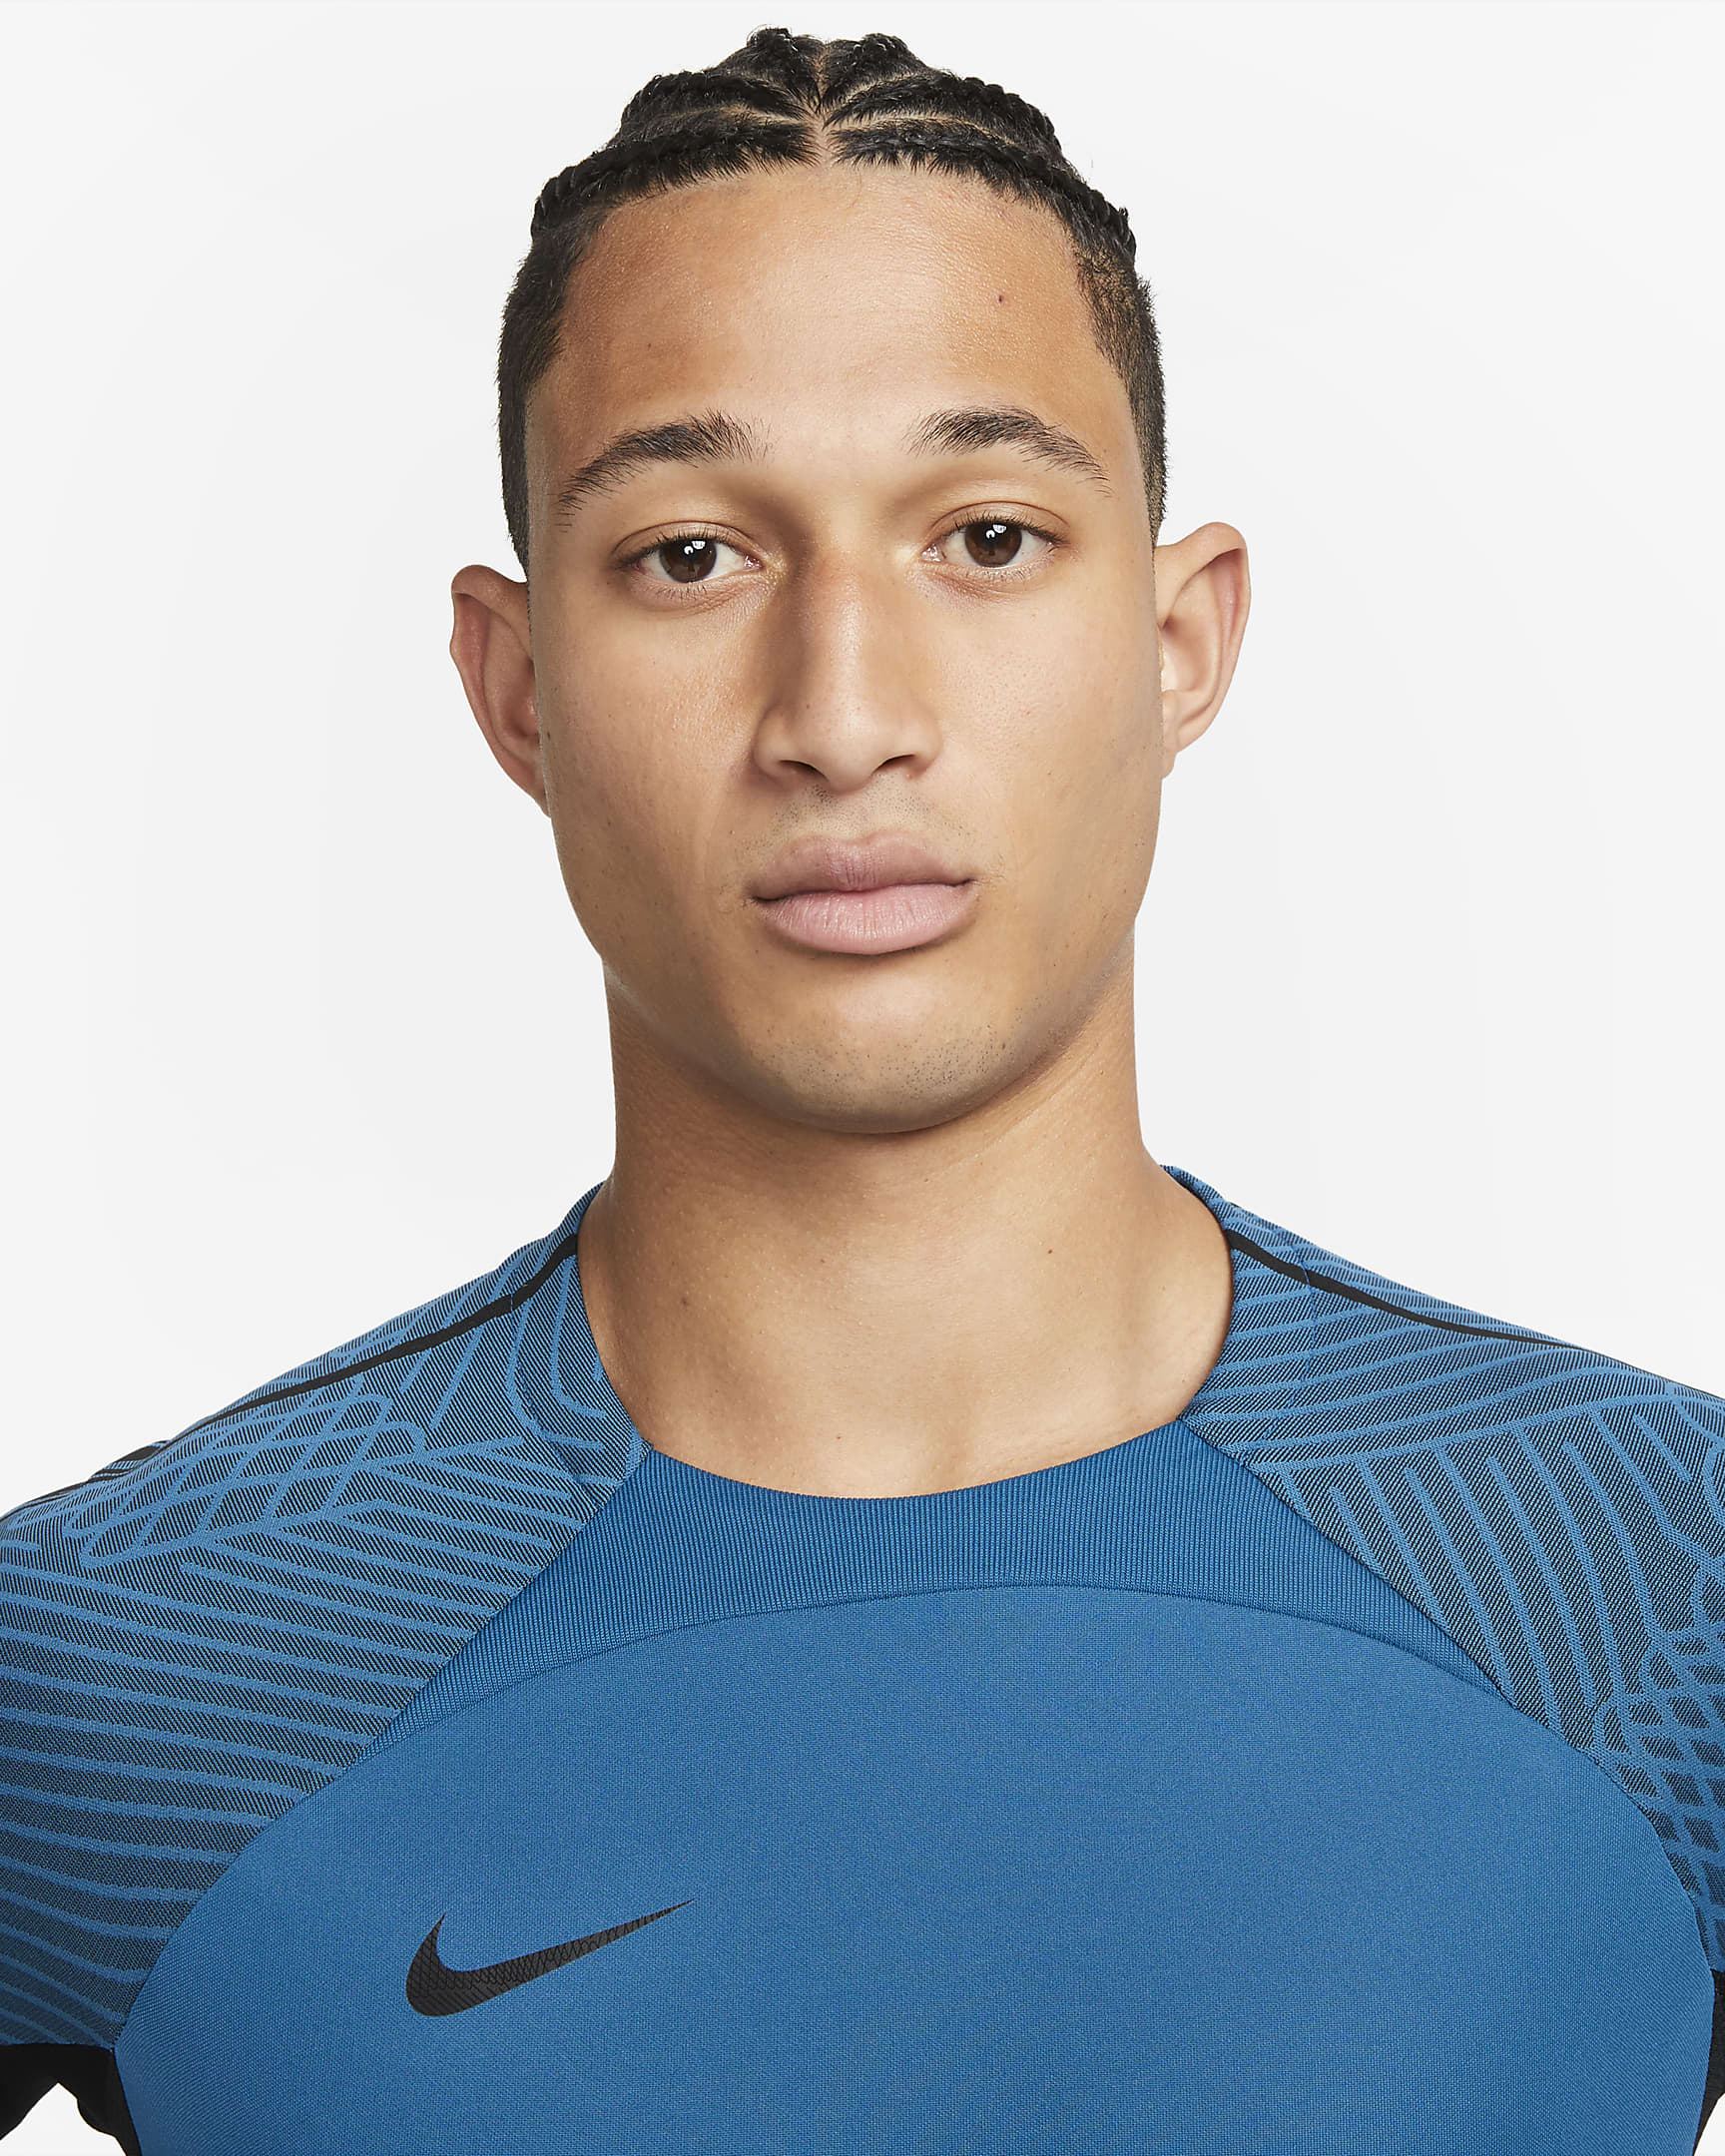 Nike Dri-FIT Strike Men's Short-Sleeve Football Top. Nike UK